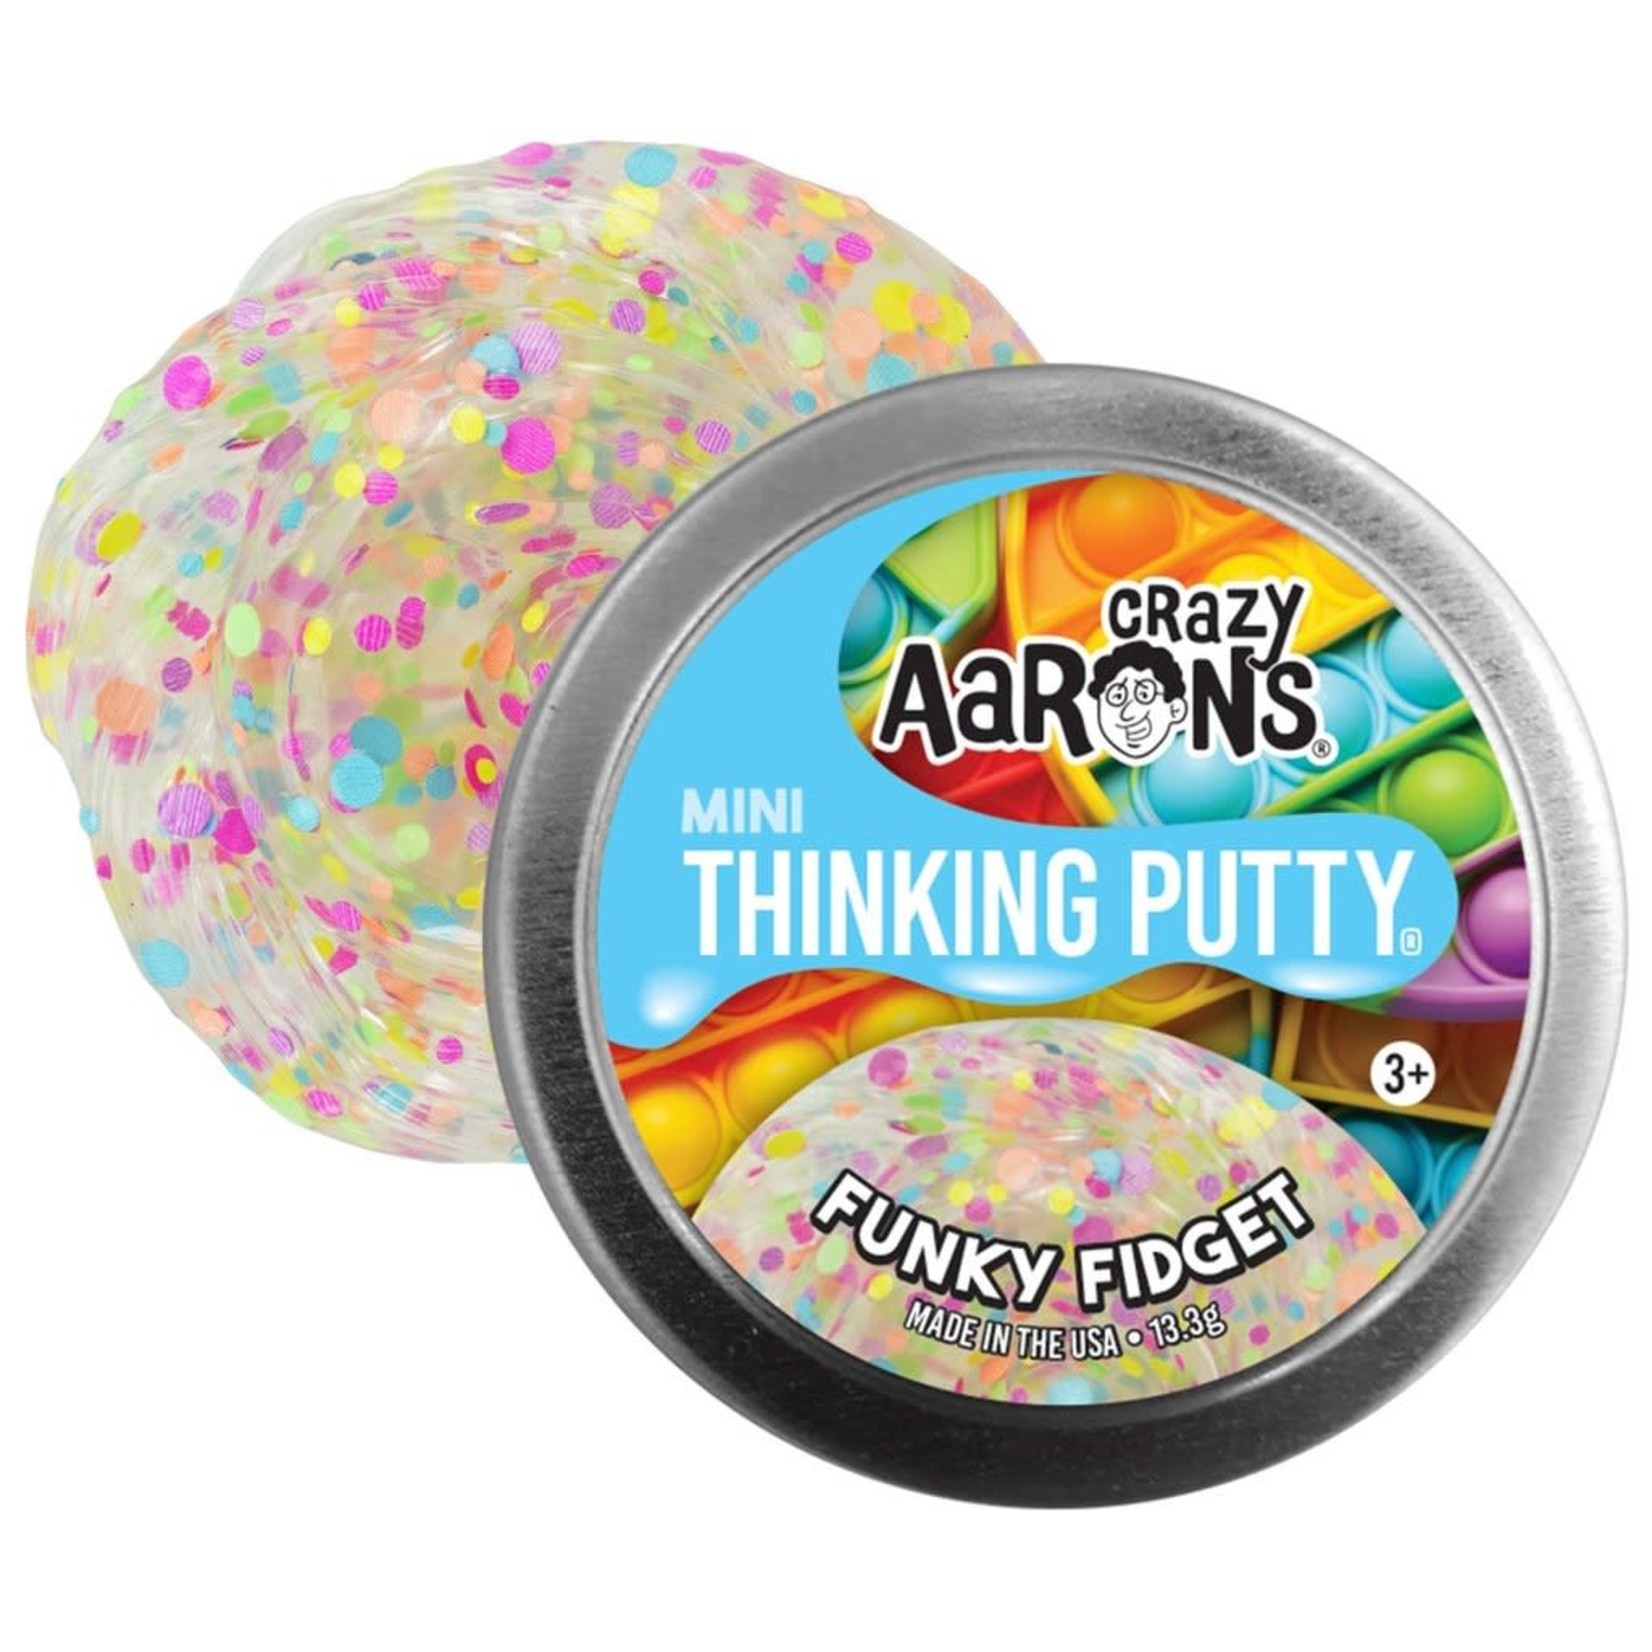 Crazy Aaron's Thinking Putty Mini Funky Fidget Thinking Putty